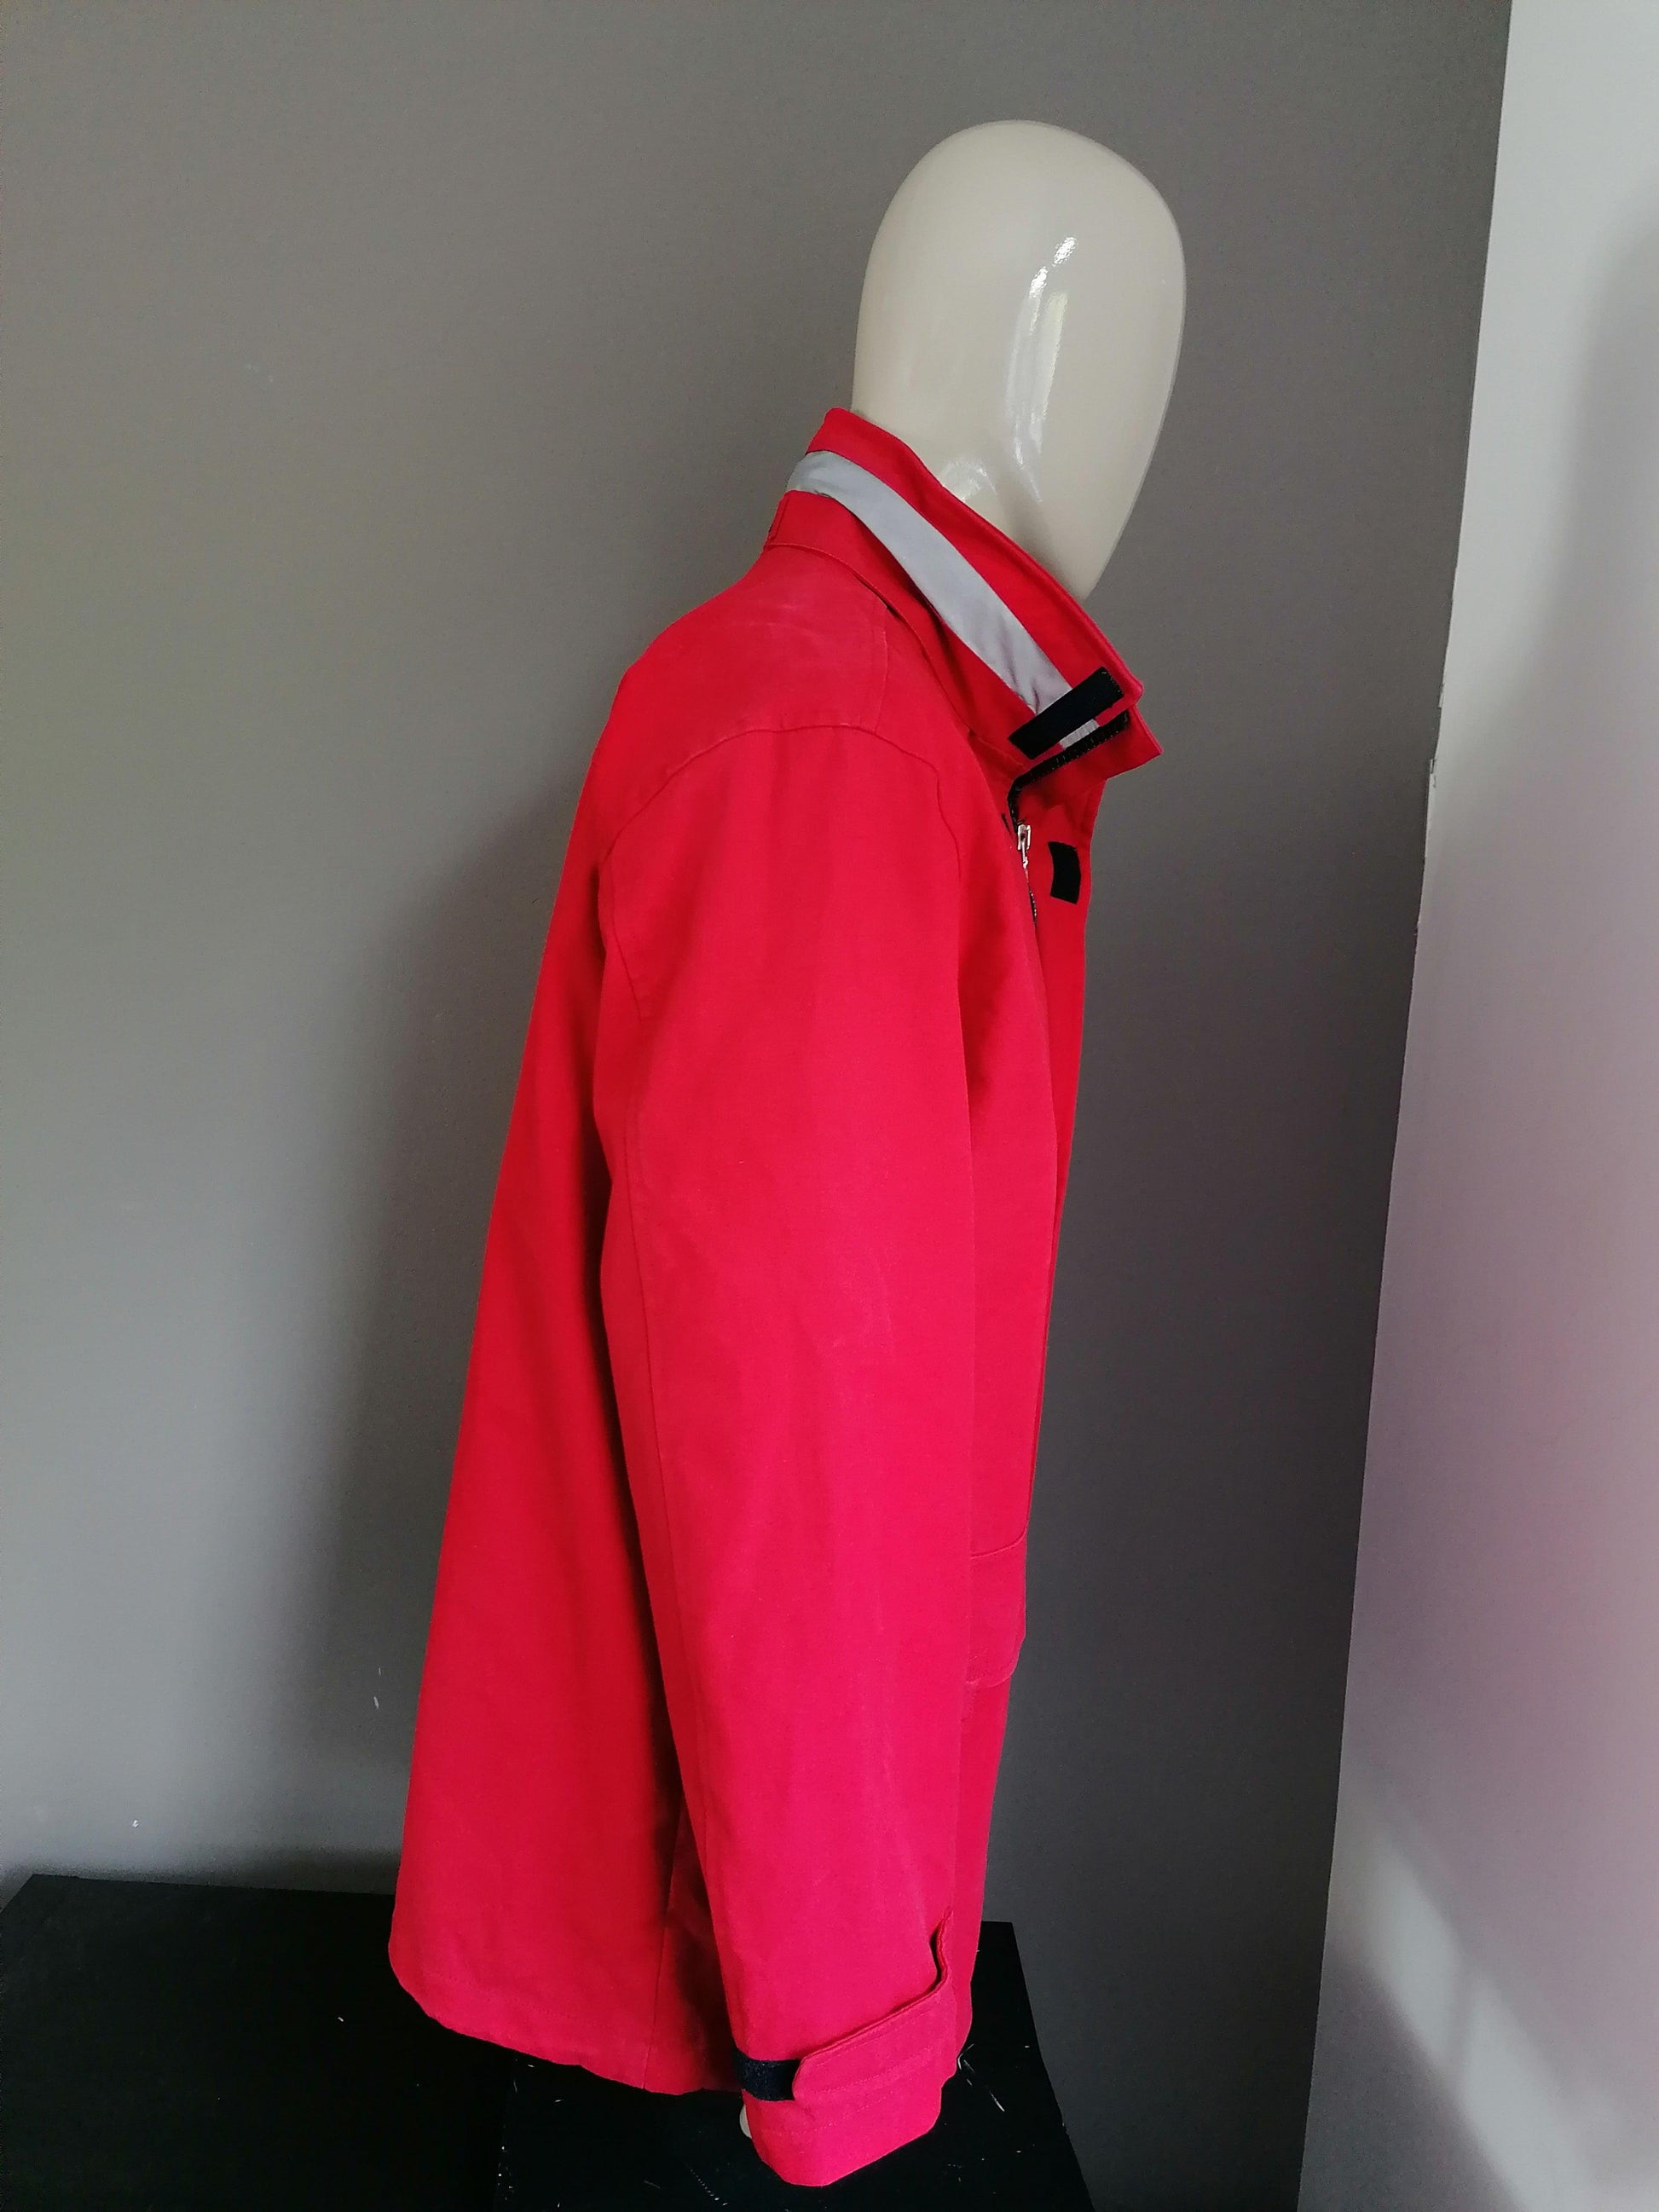 B keus: Gant halflange jas. Rood. Maat XL. Vlekje + Vaal - EcoGents